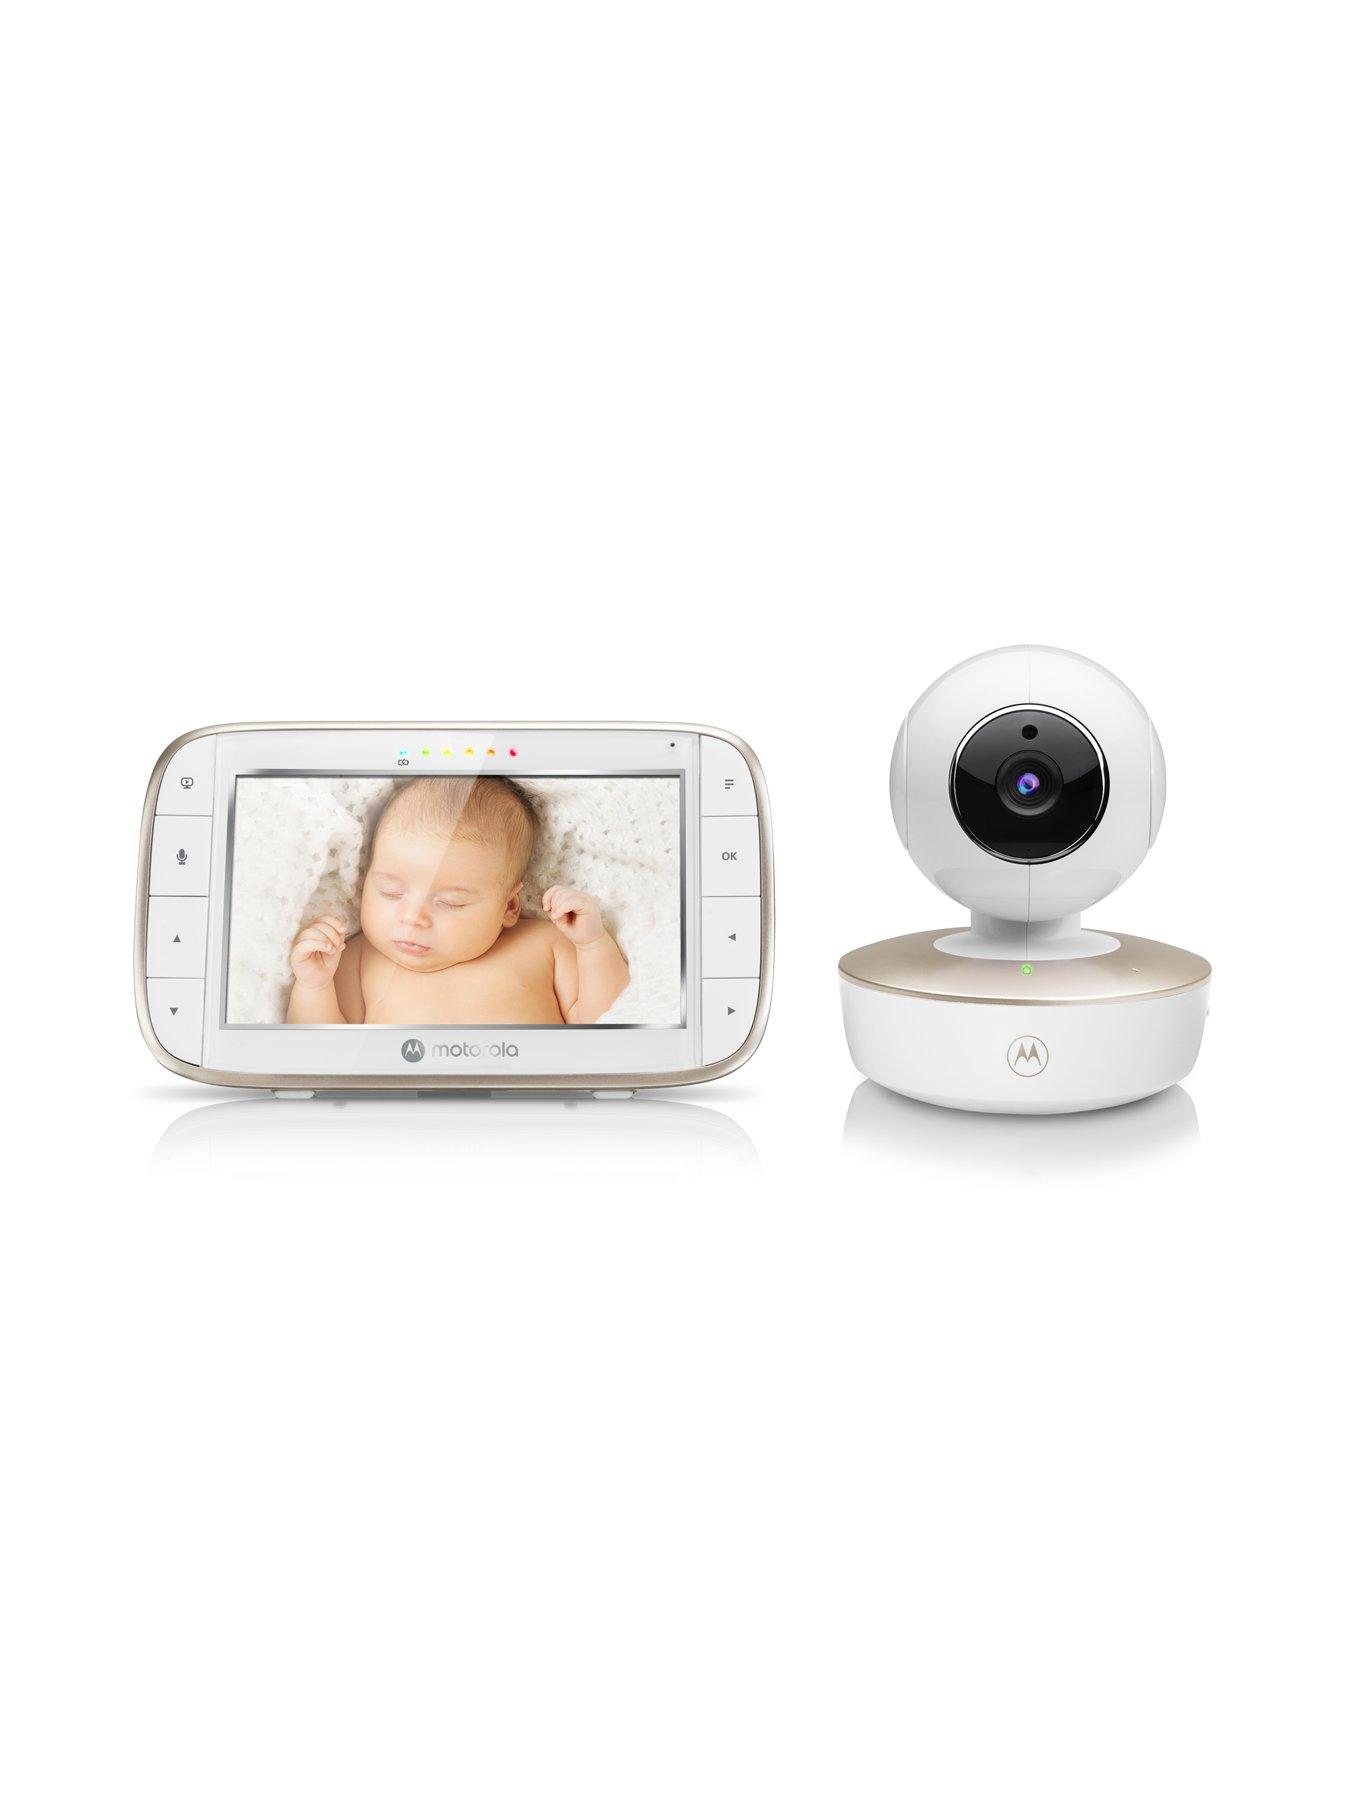 Motorola Vm855 Smart Connect Wi-Fi Video Baby Monitor With Motorola Nursery App And 5